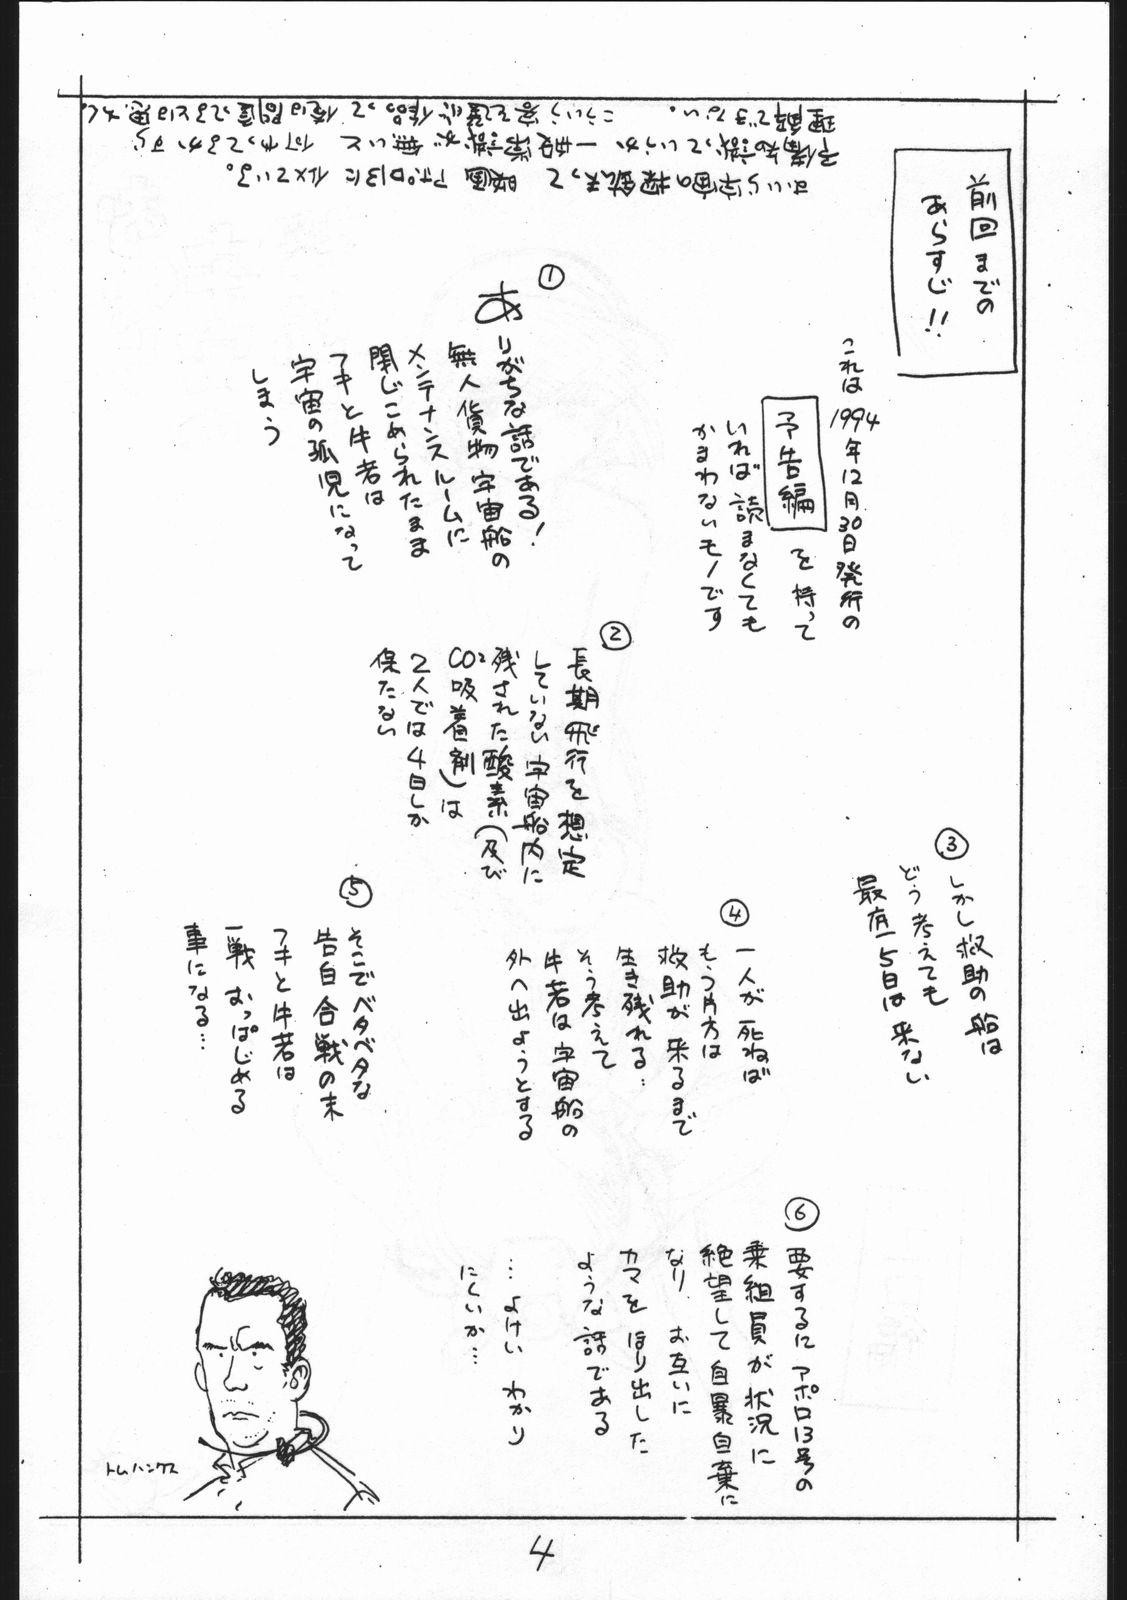 Enpitsu Egaki H Manga Vol. 3 3